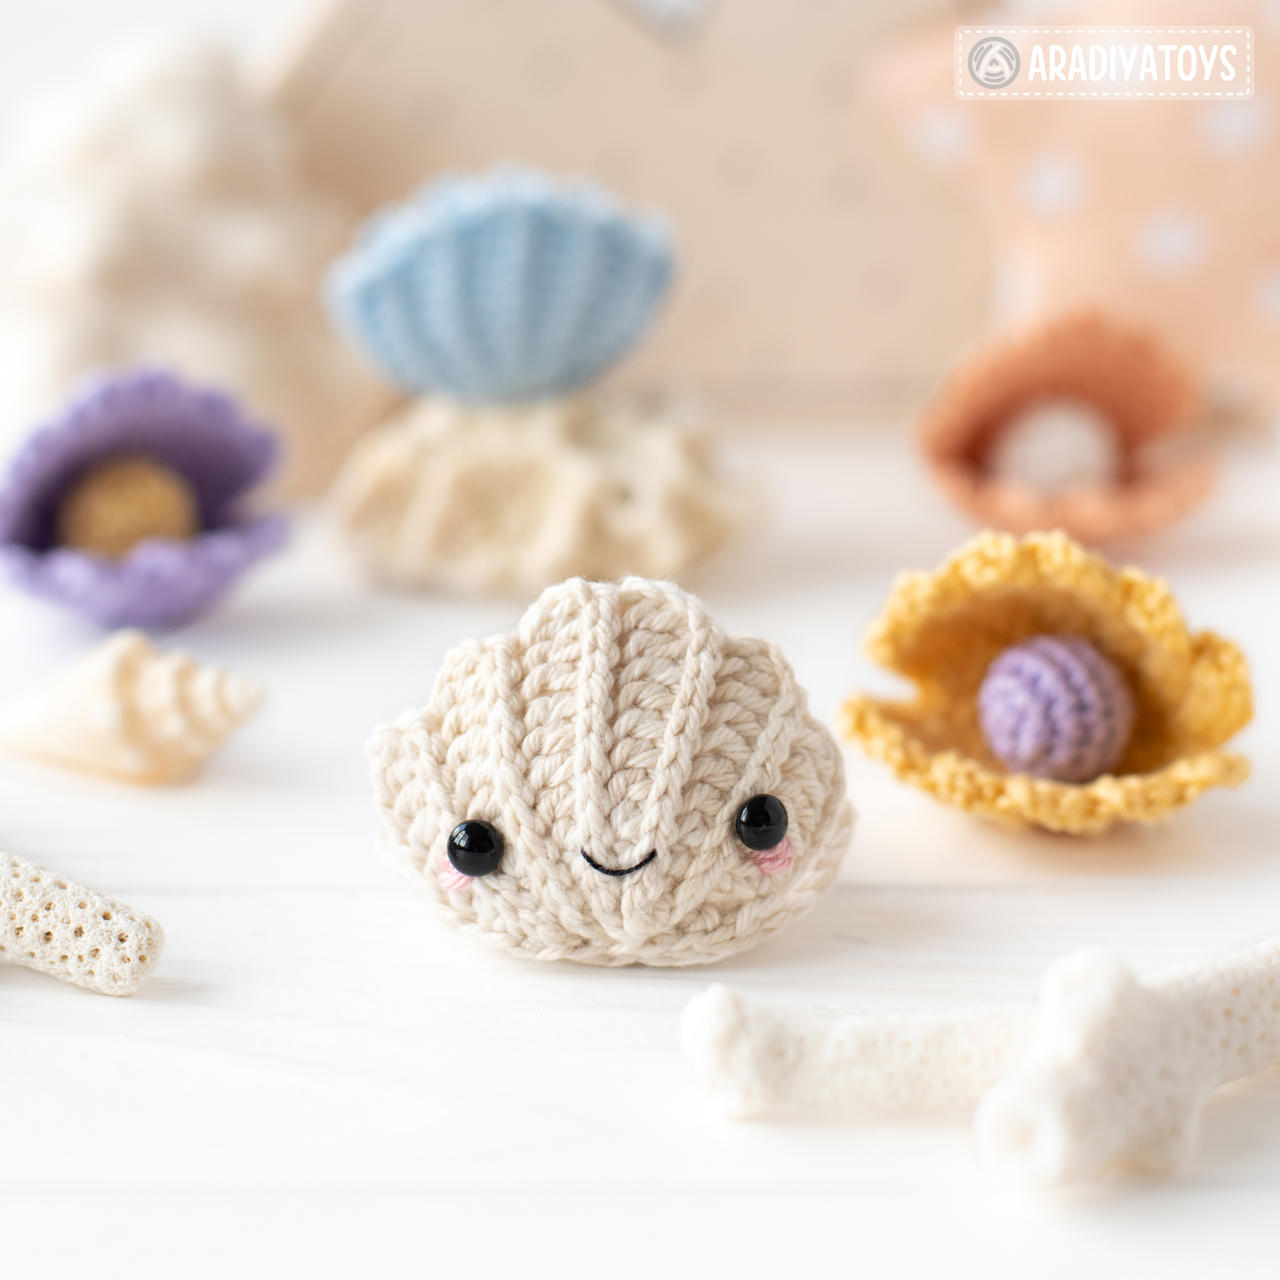 Baby Seashell FREE pattern by AradiyaToys by AradiyaToys on